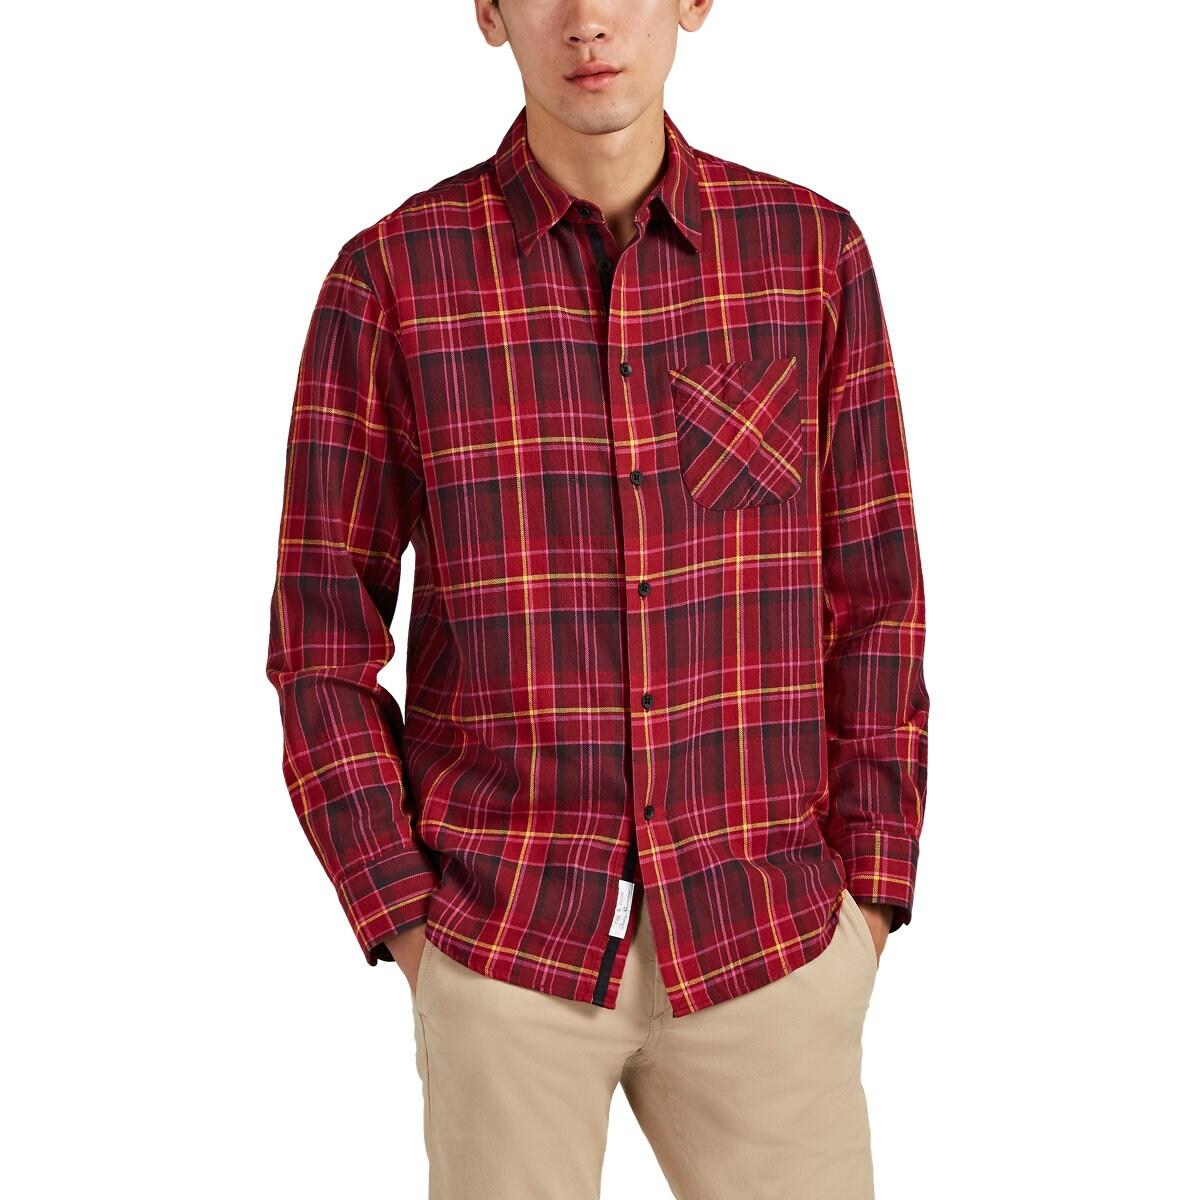 Rag & Bone Plaid Cotton Flannel Shirt in Red for Men - Lyst